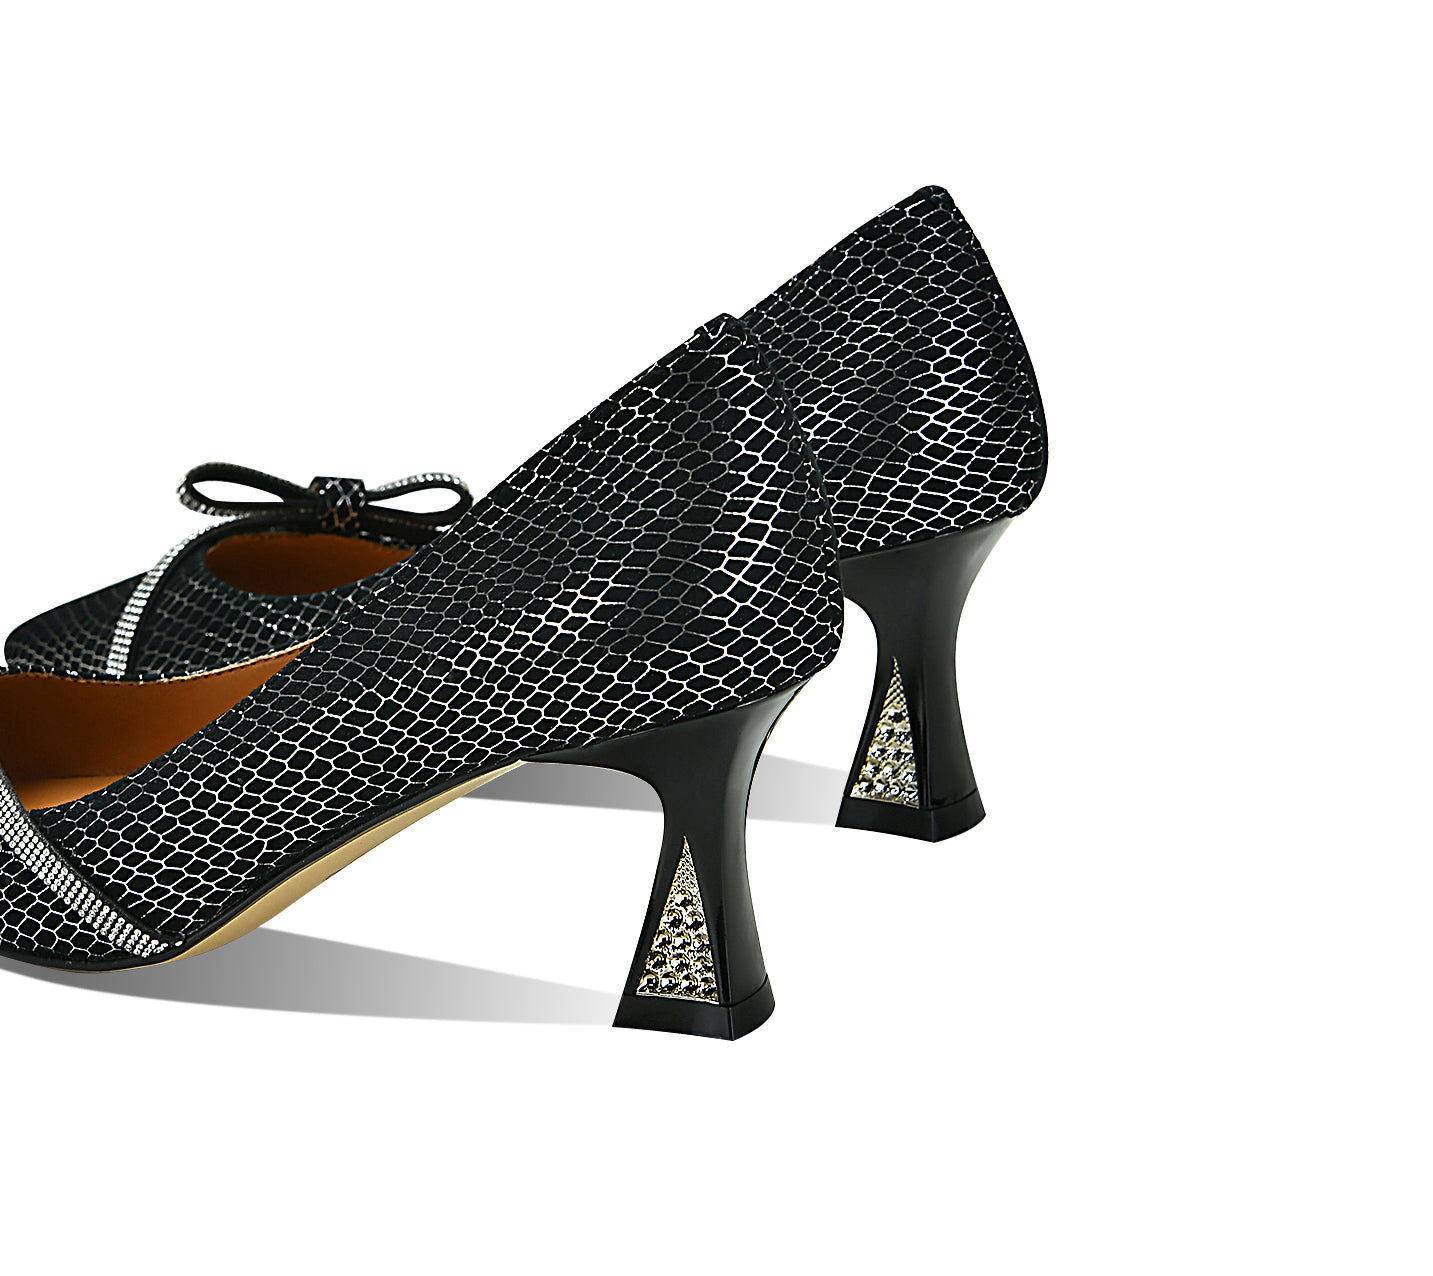 TinaCus Handmade Women's Genuine Leather Snakeskin Slip On Pointed Toe Mid Spool Heel Pumps Shoes